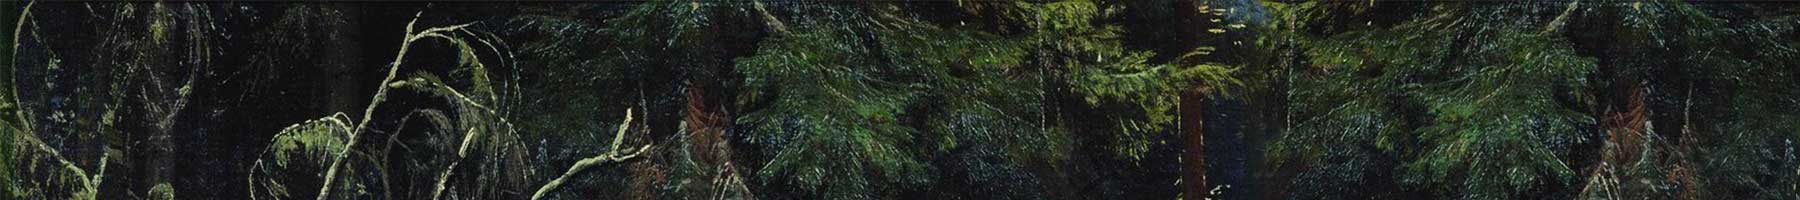 painting of fallen down fir tree in a dark forest